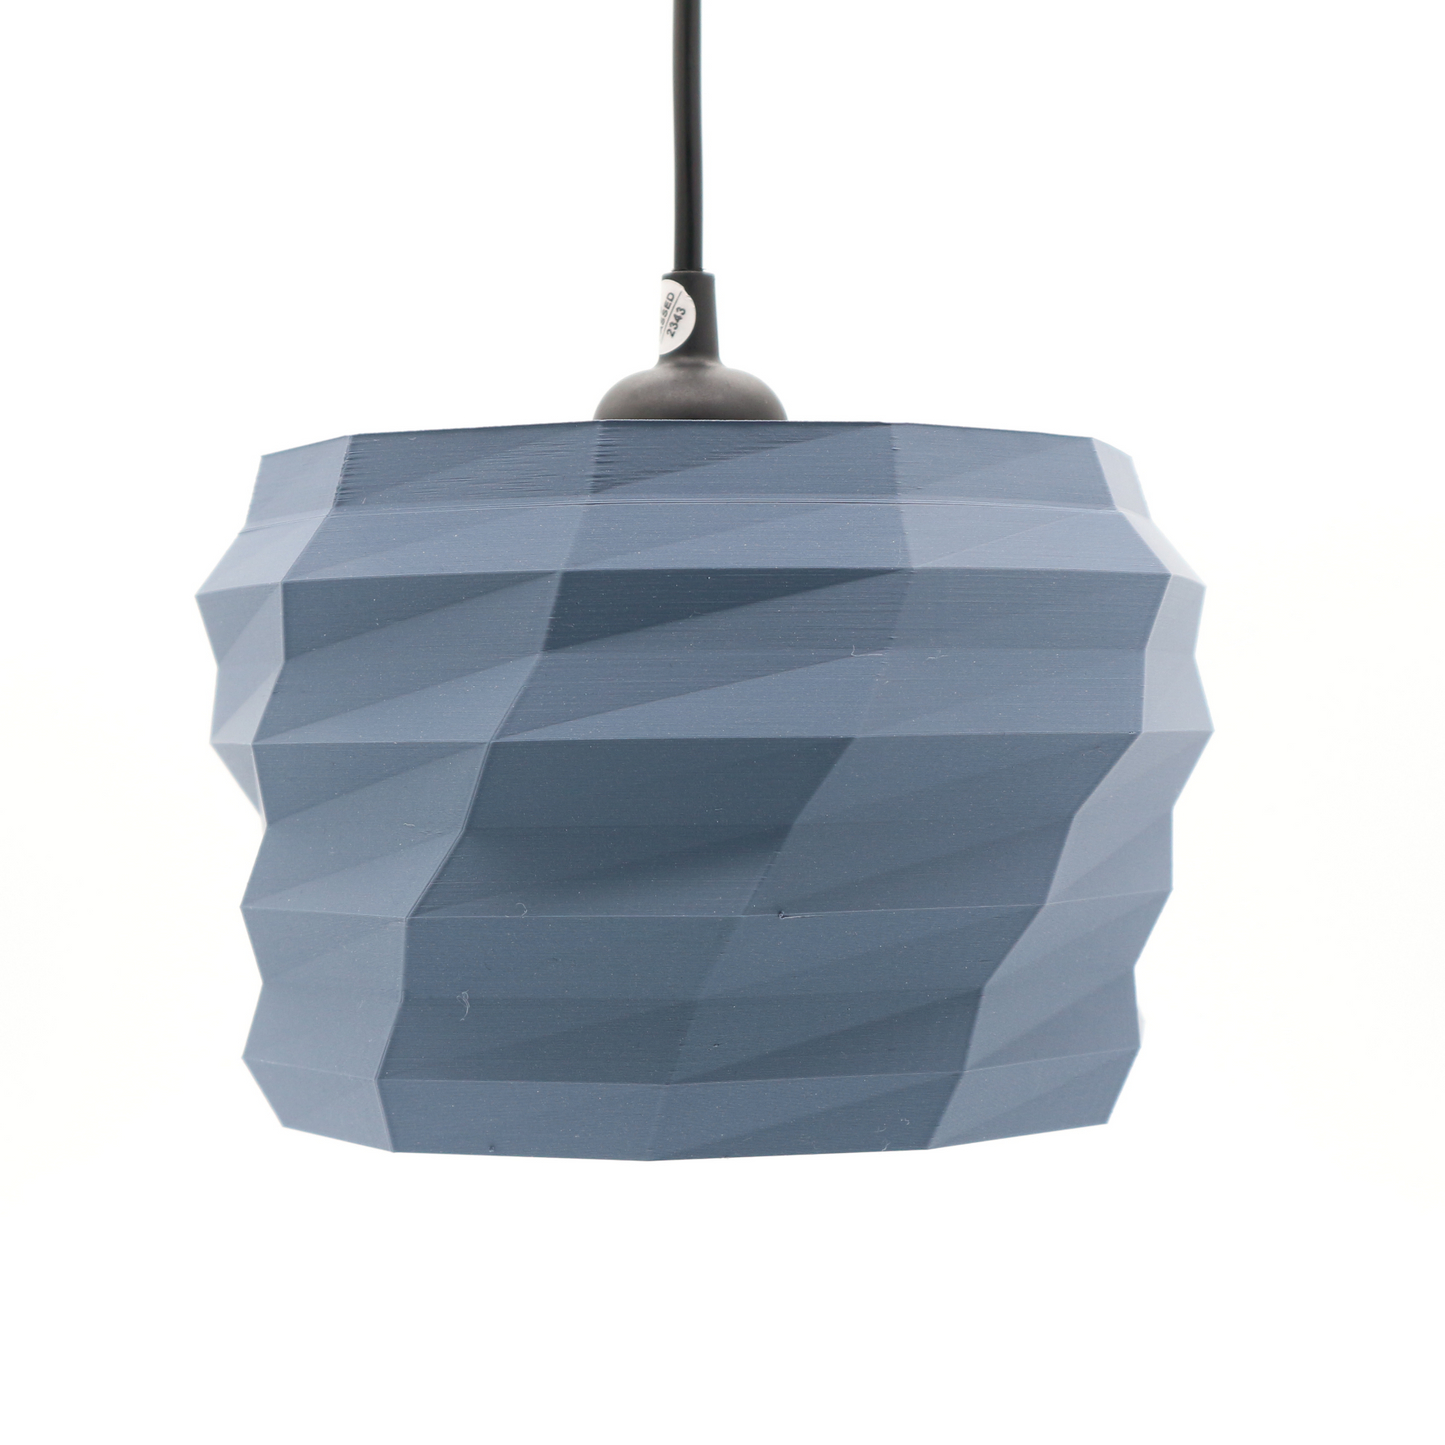 Alberobello design pendant lamp grey edition